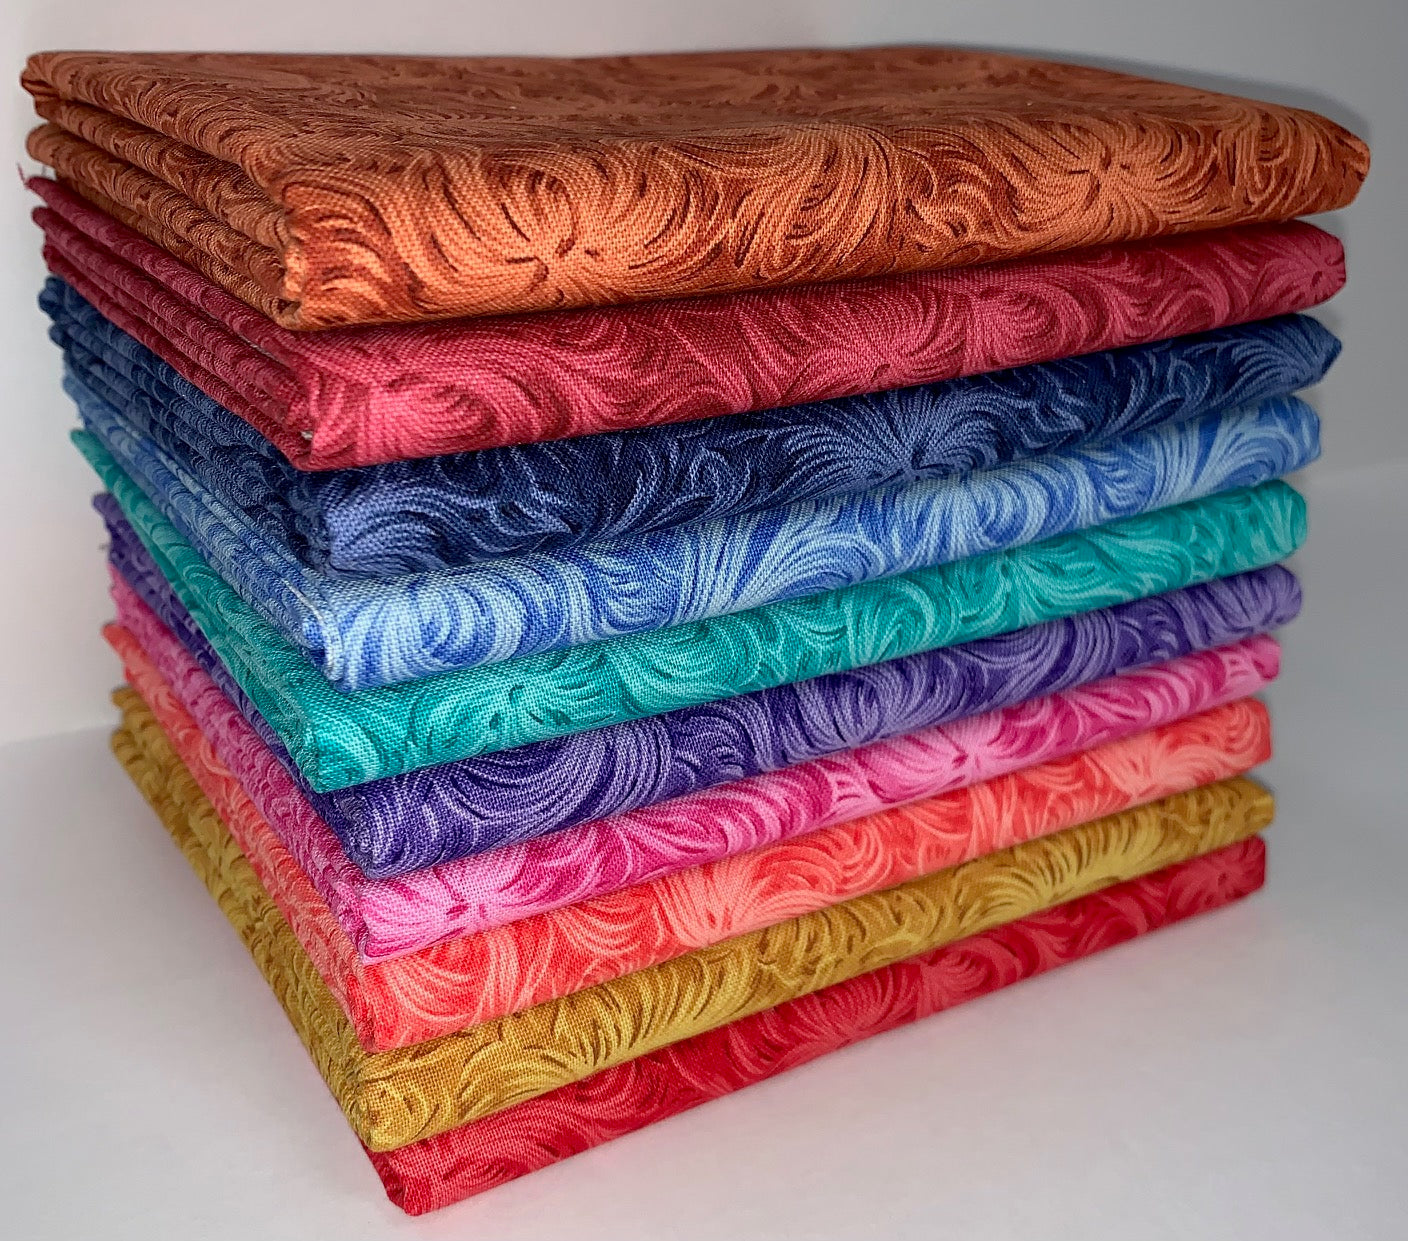 Feathered Roses Half-Yard Bundle - 10 Fabrics, 5 Total Yards